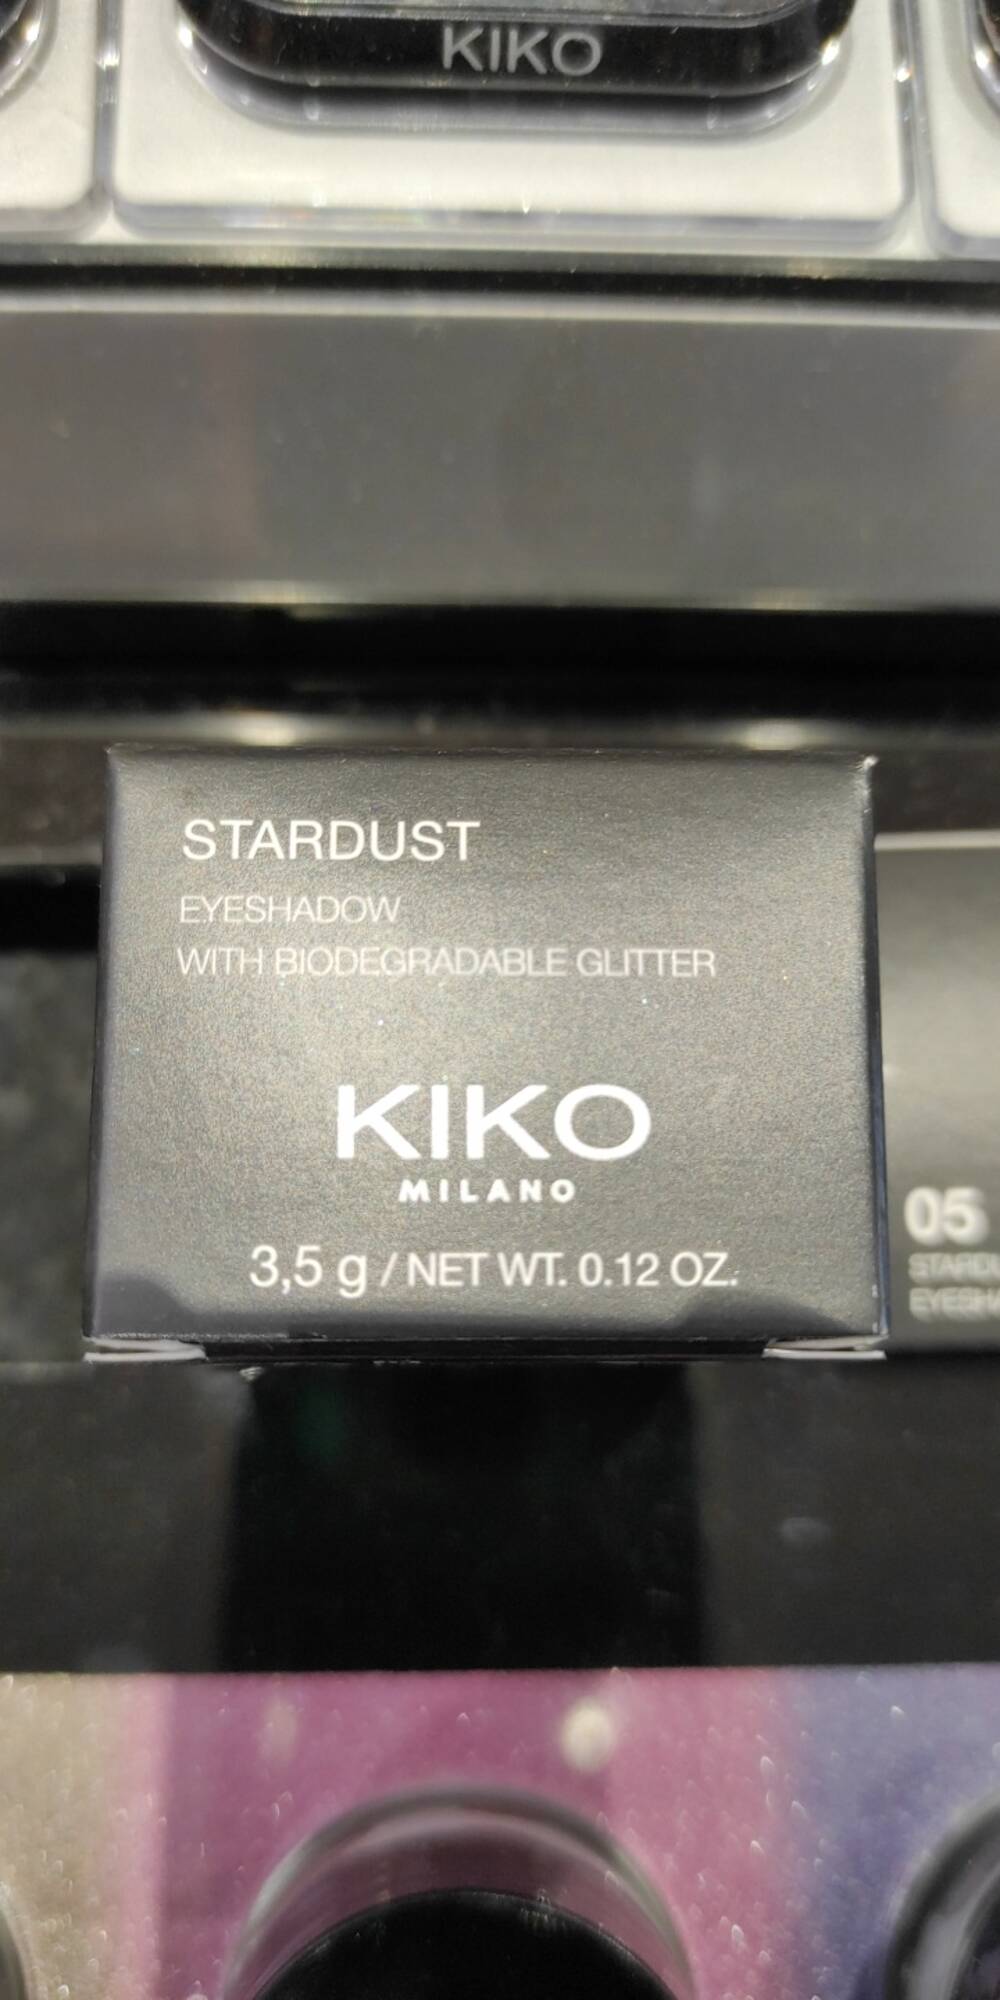 KIKO - Stardust - Eyeshadow with biodegradable gutter